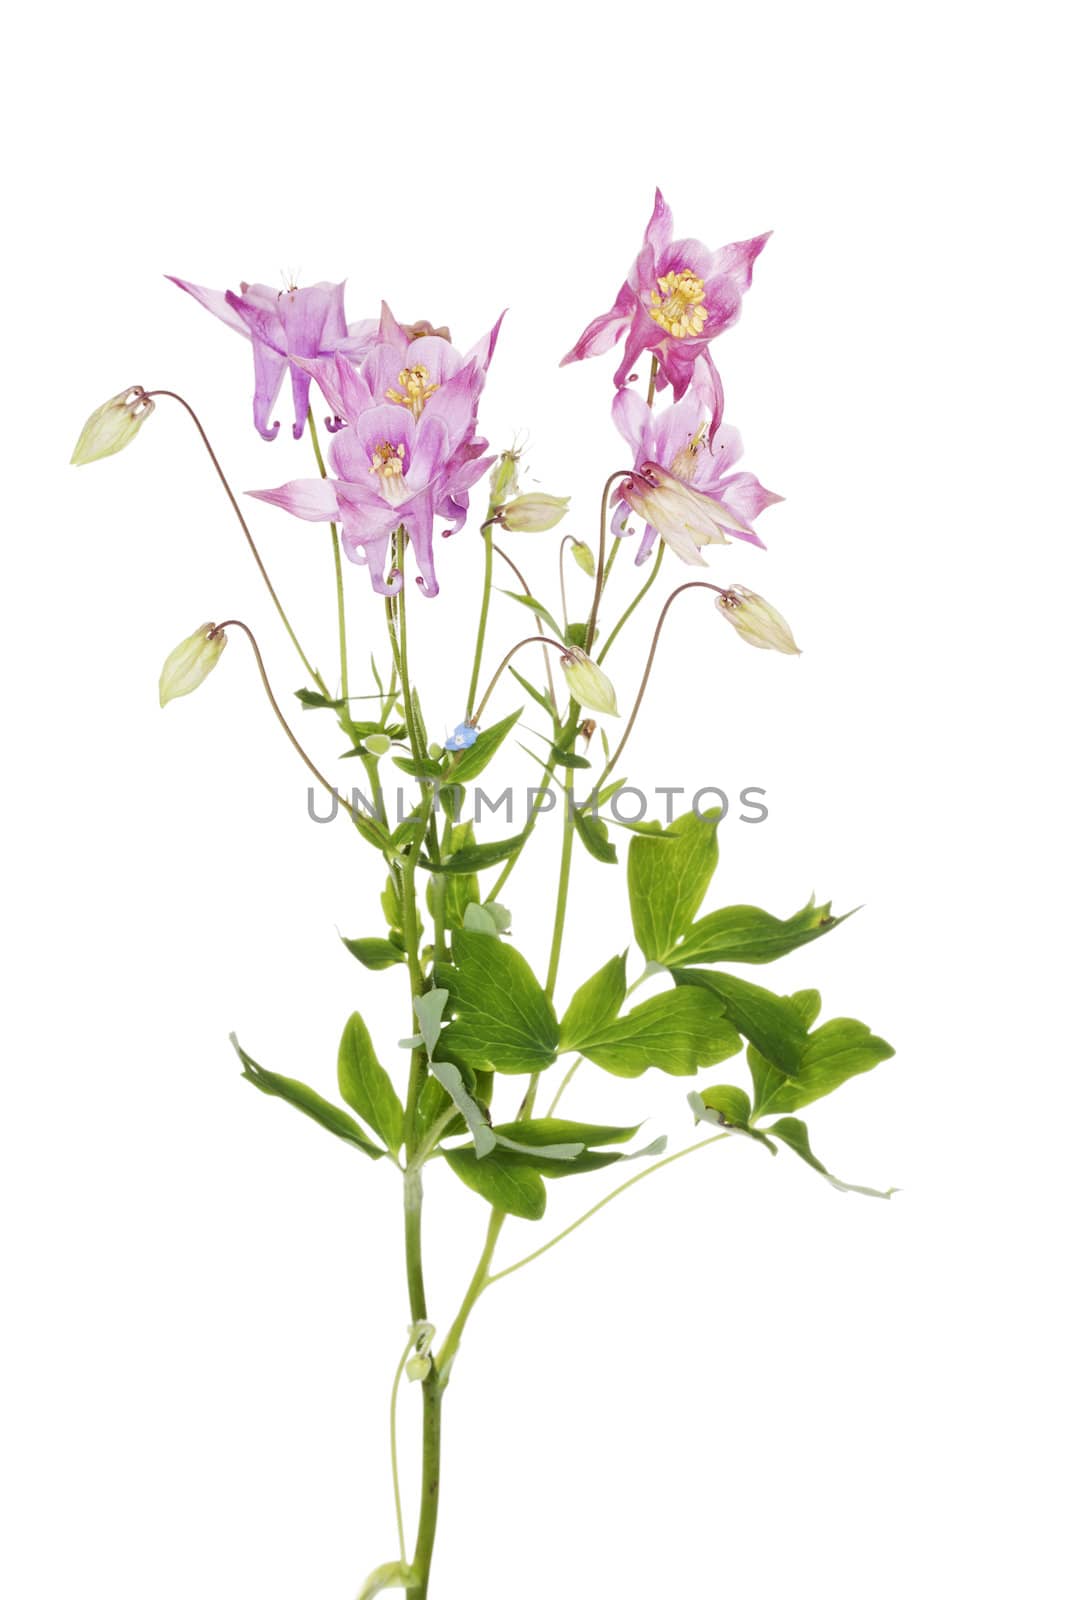 Aquilegia vulgaris (European Columbine) flower